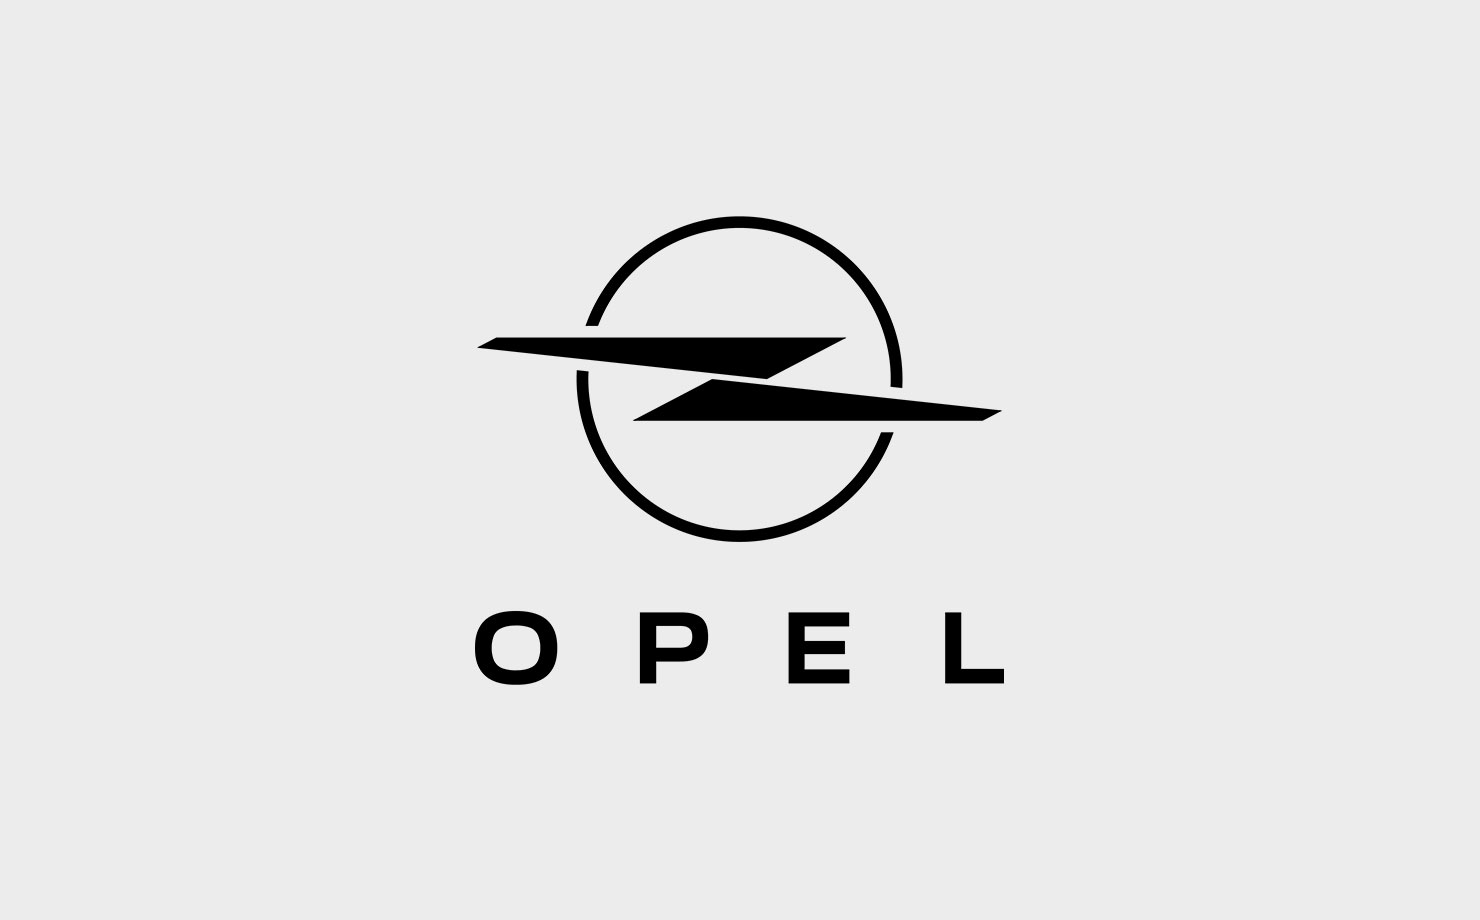 Image of Opel logo